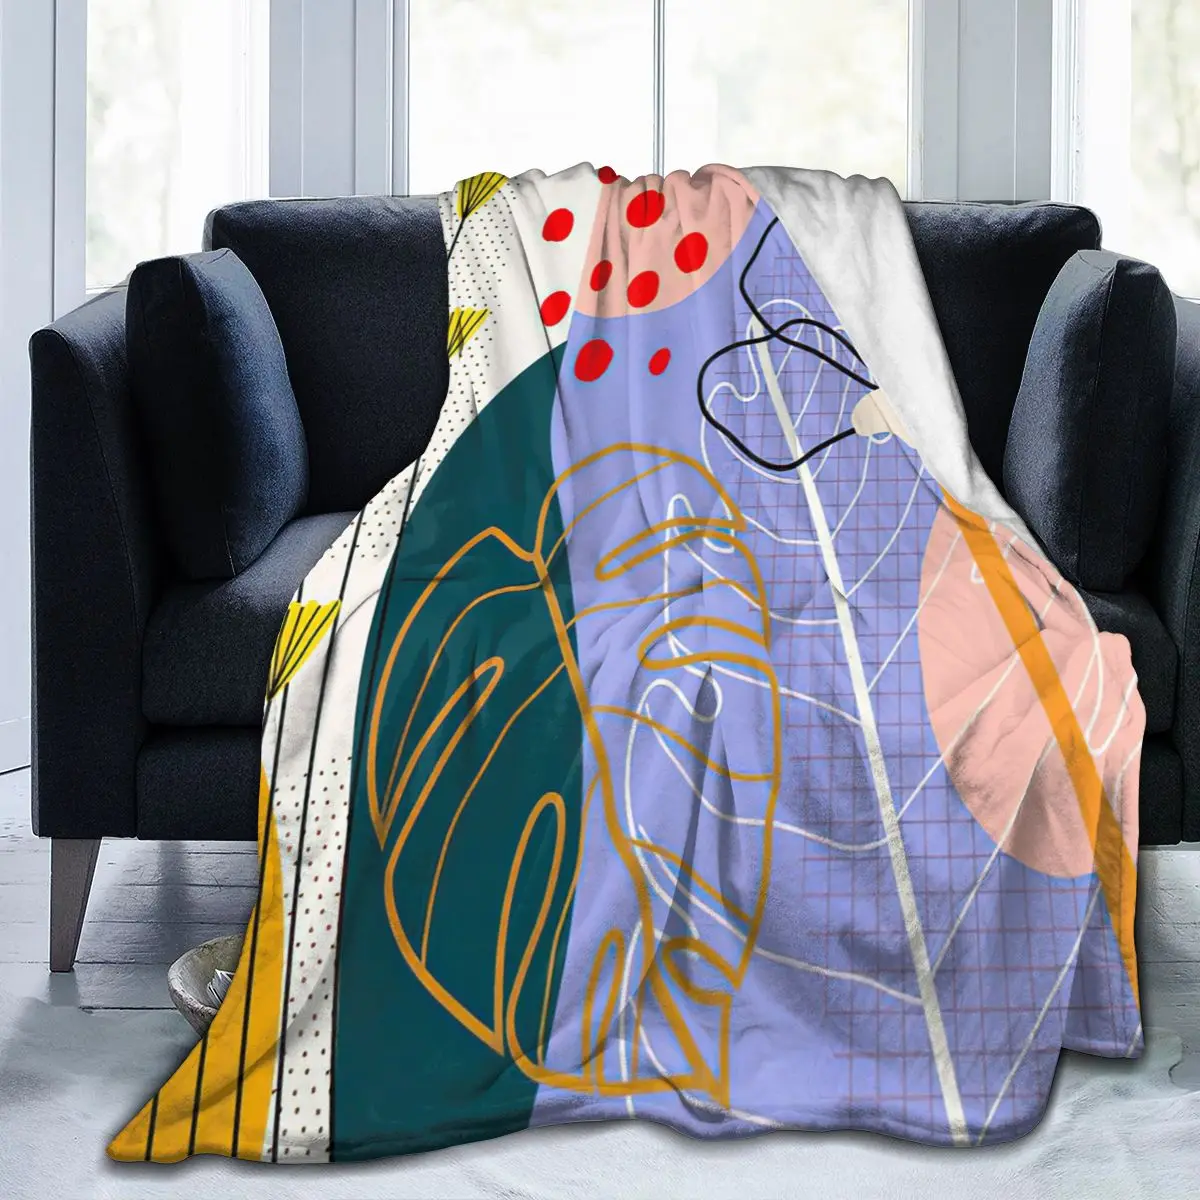 

Super Soft Sofa Blanket Plaid Collage Sublimation Cartoon Animation Bedding Flannel Plaid Blanket Bedroom Decorative Blanket 400